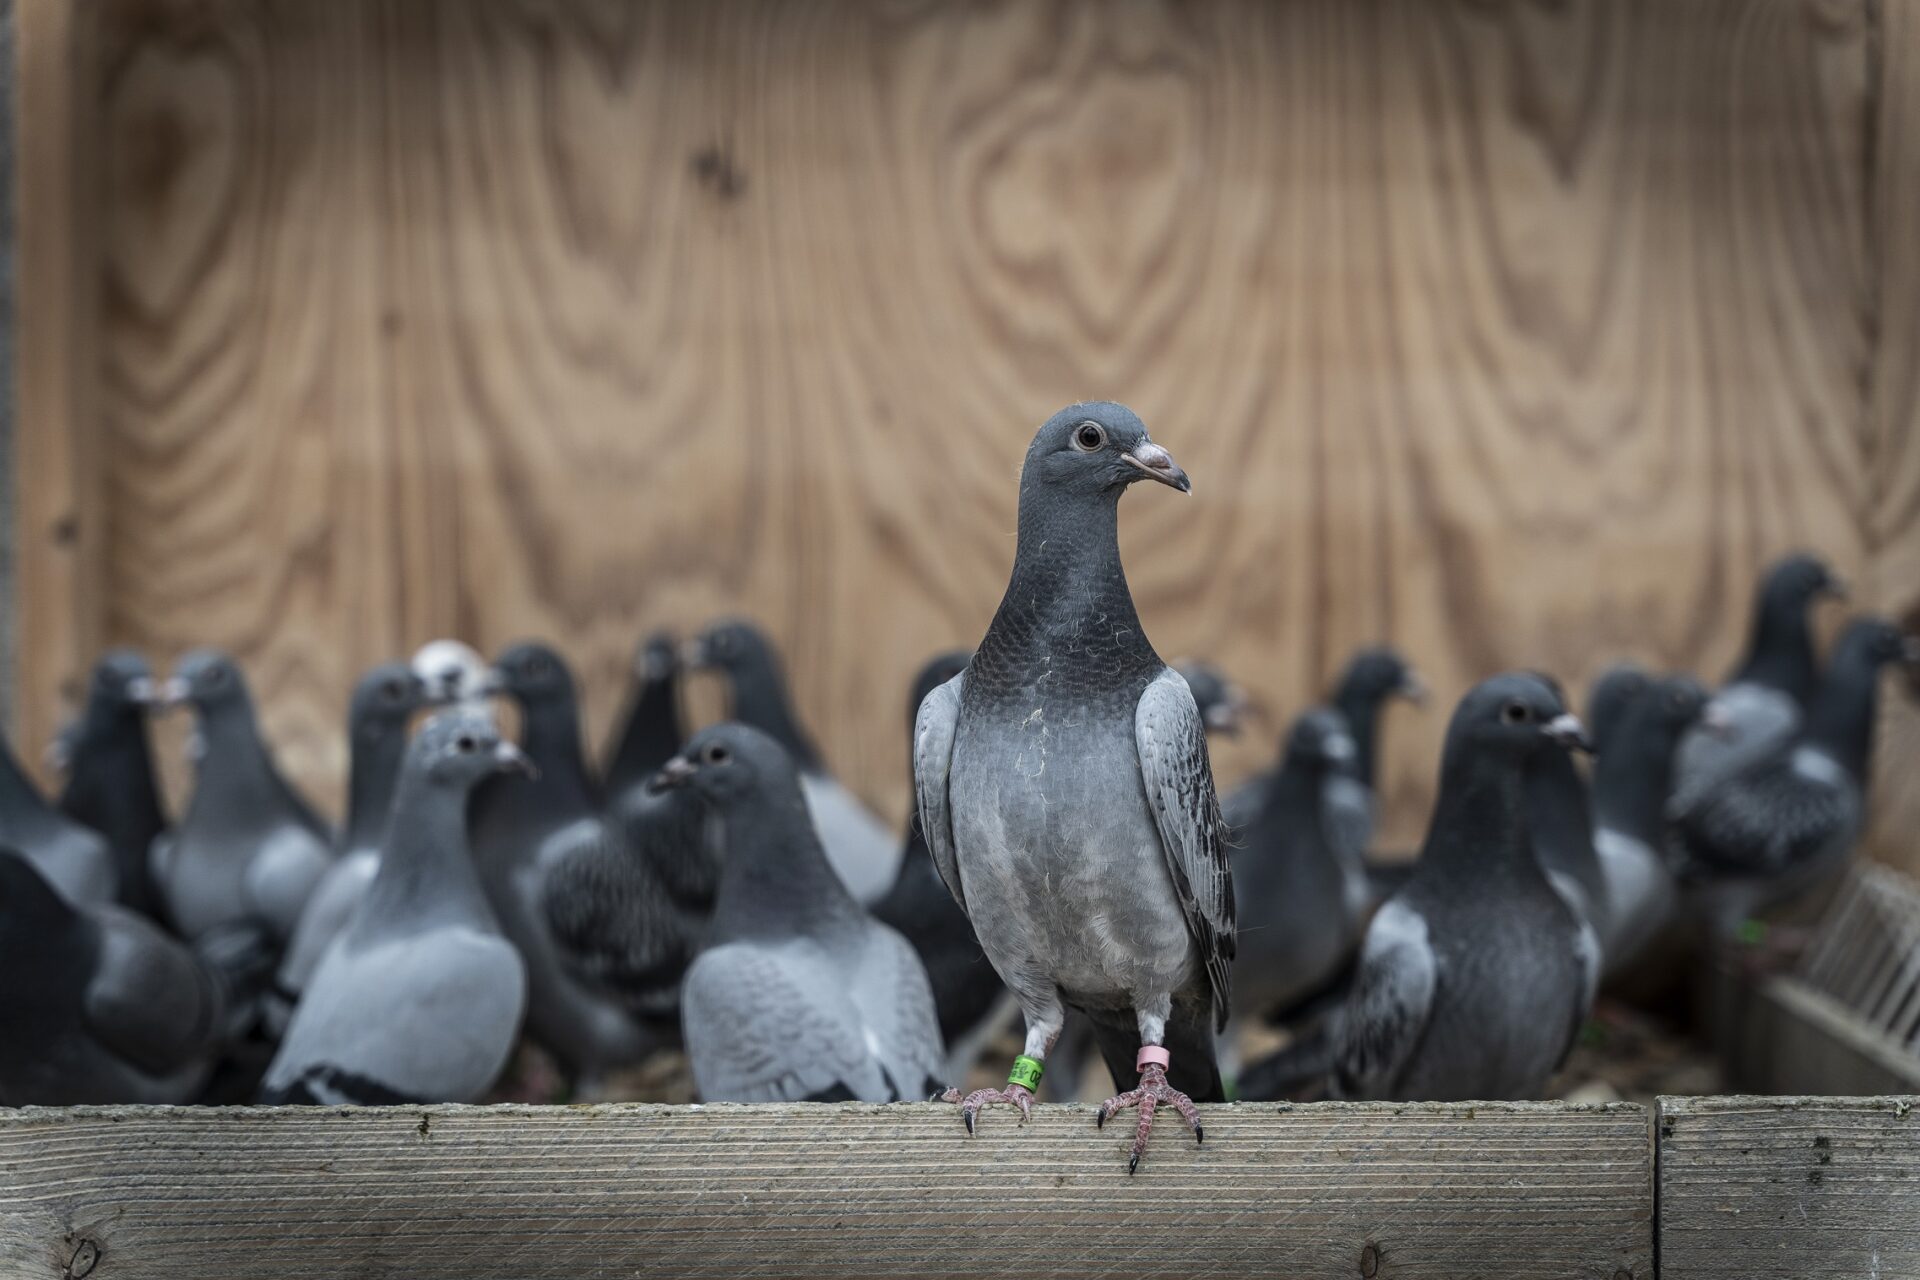 Meet the duivenfokkers